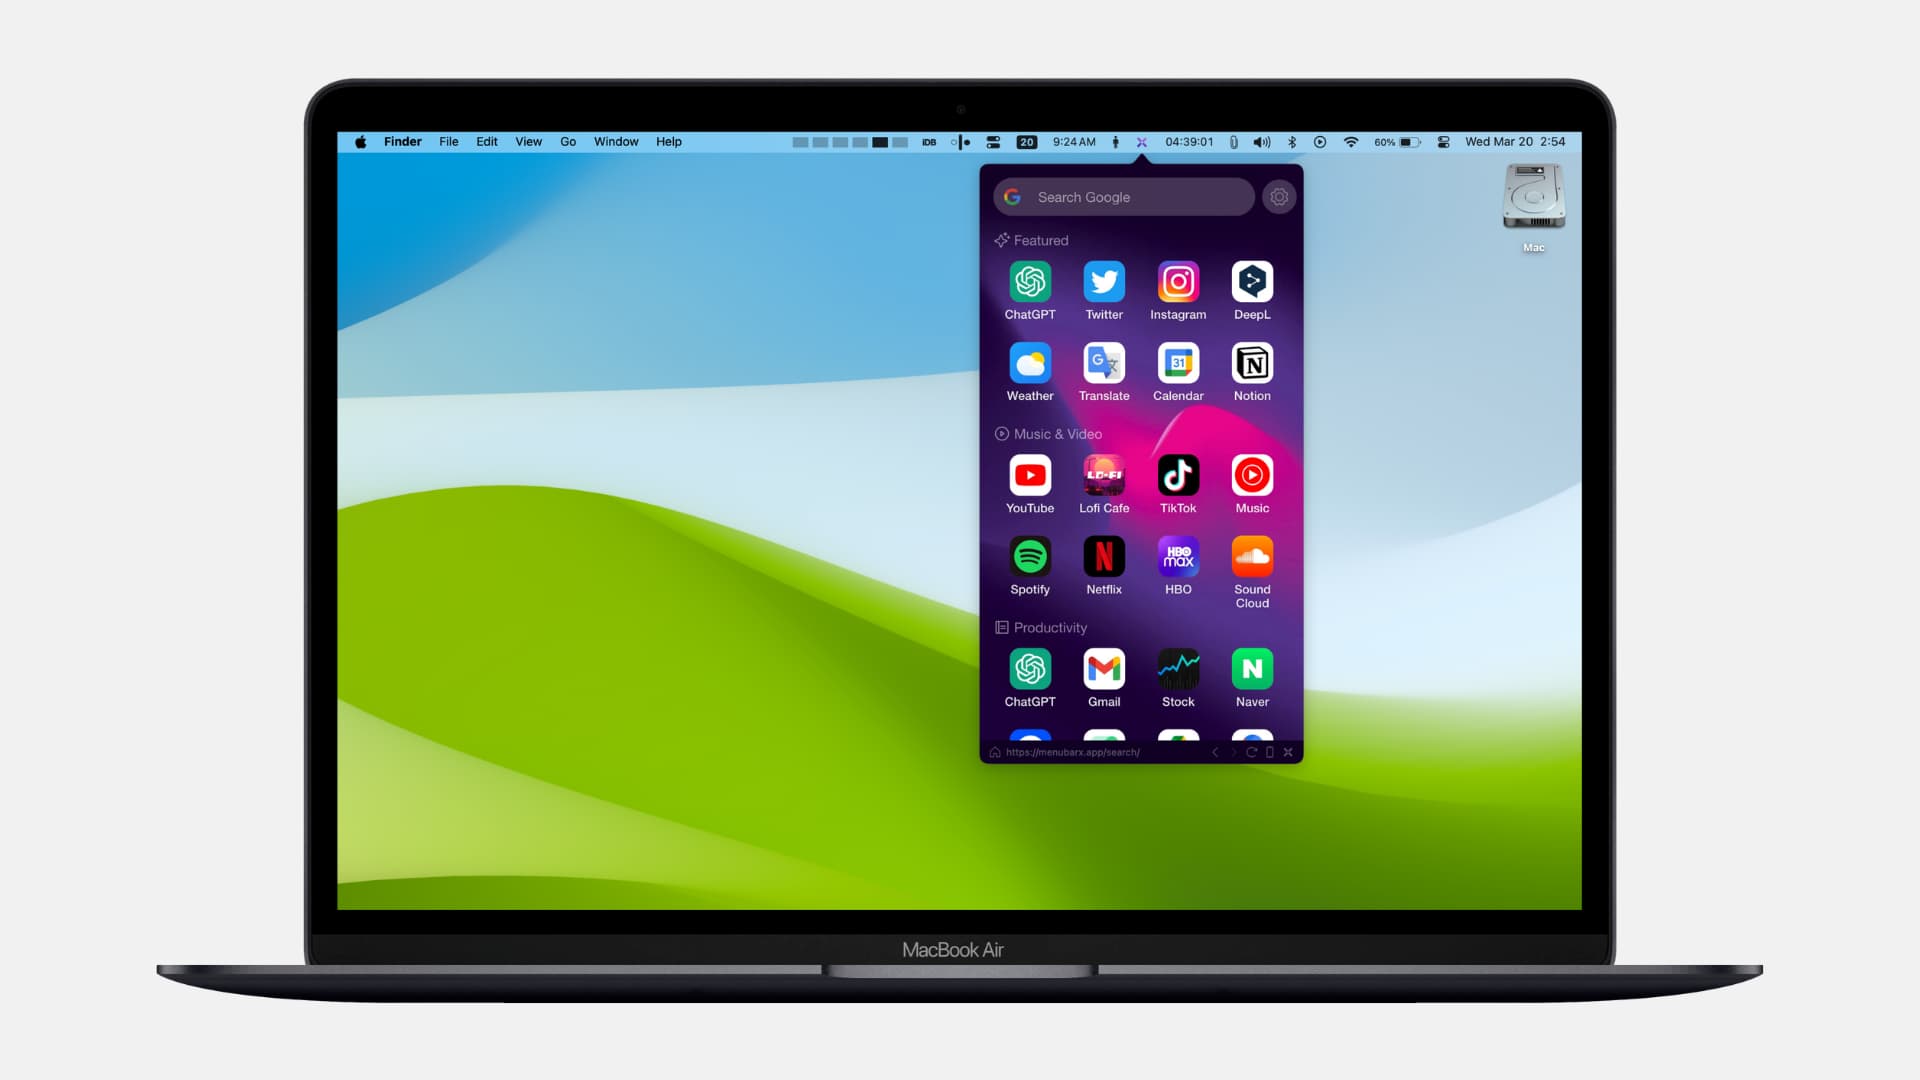 MacBook Air with MenuBarX app on the screen